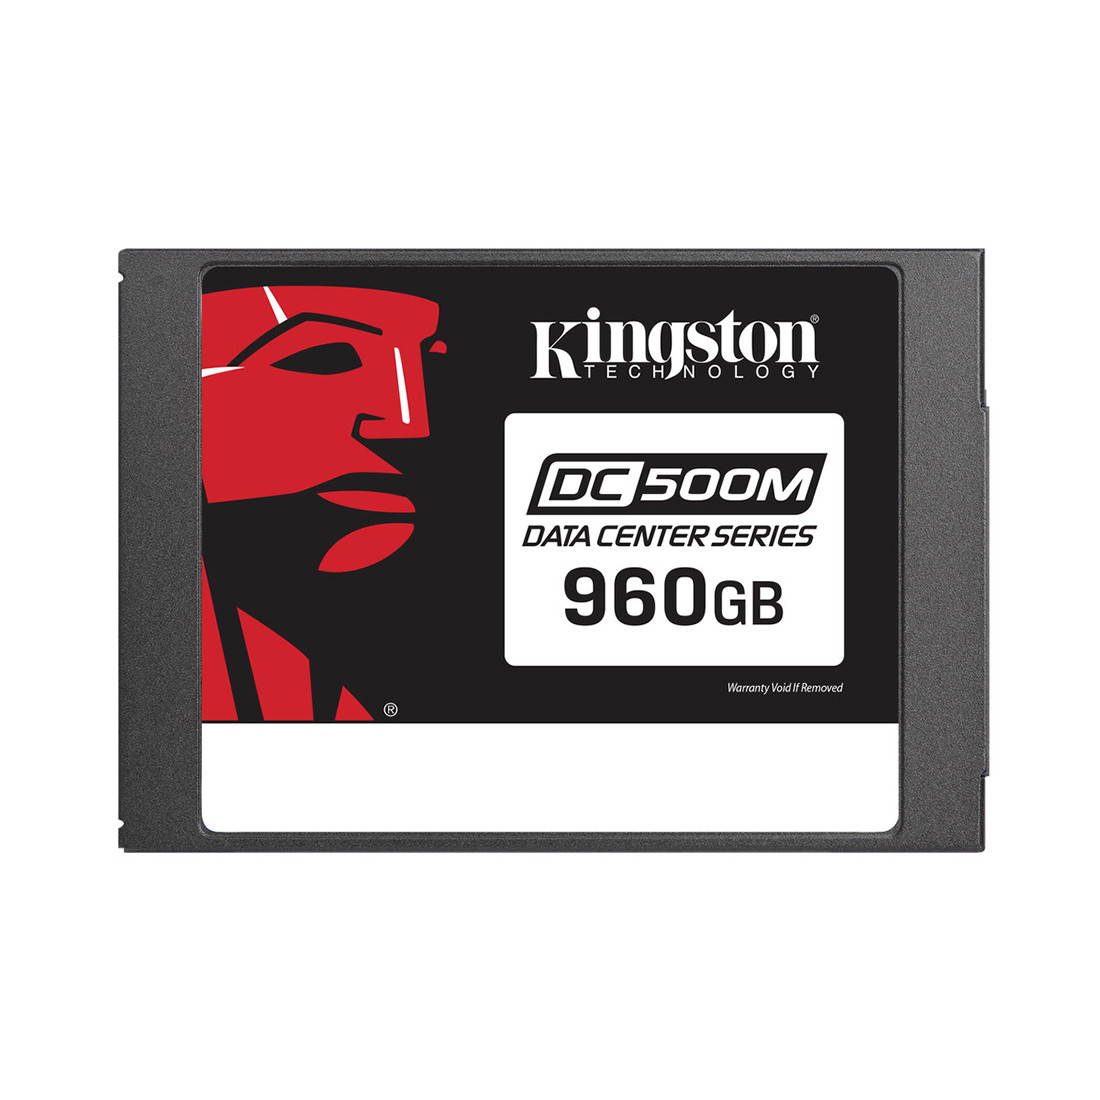 Твердотельный накопитель SSD Kingston SEDC500M/960G SATA 7мм, фото 1